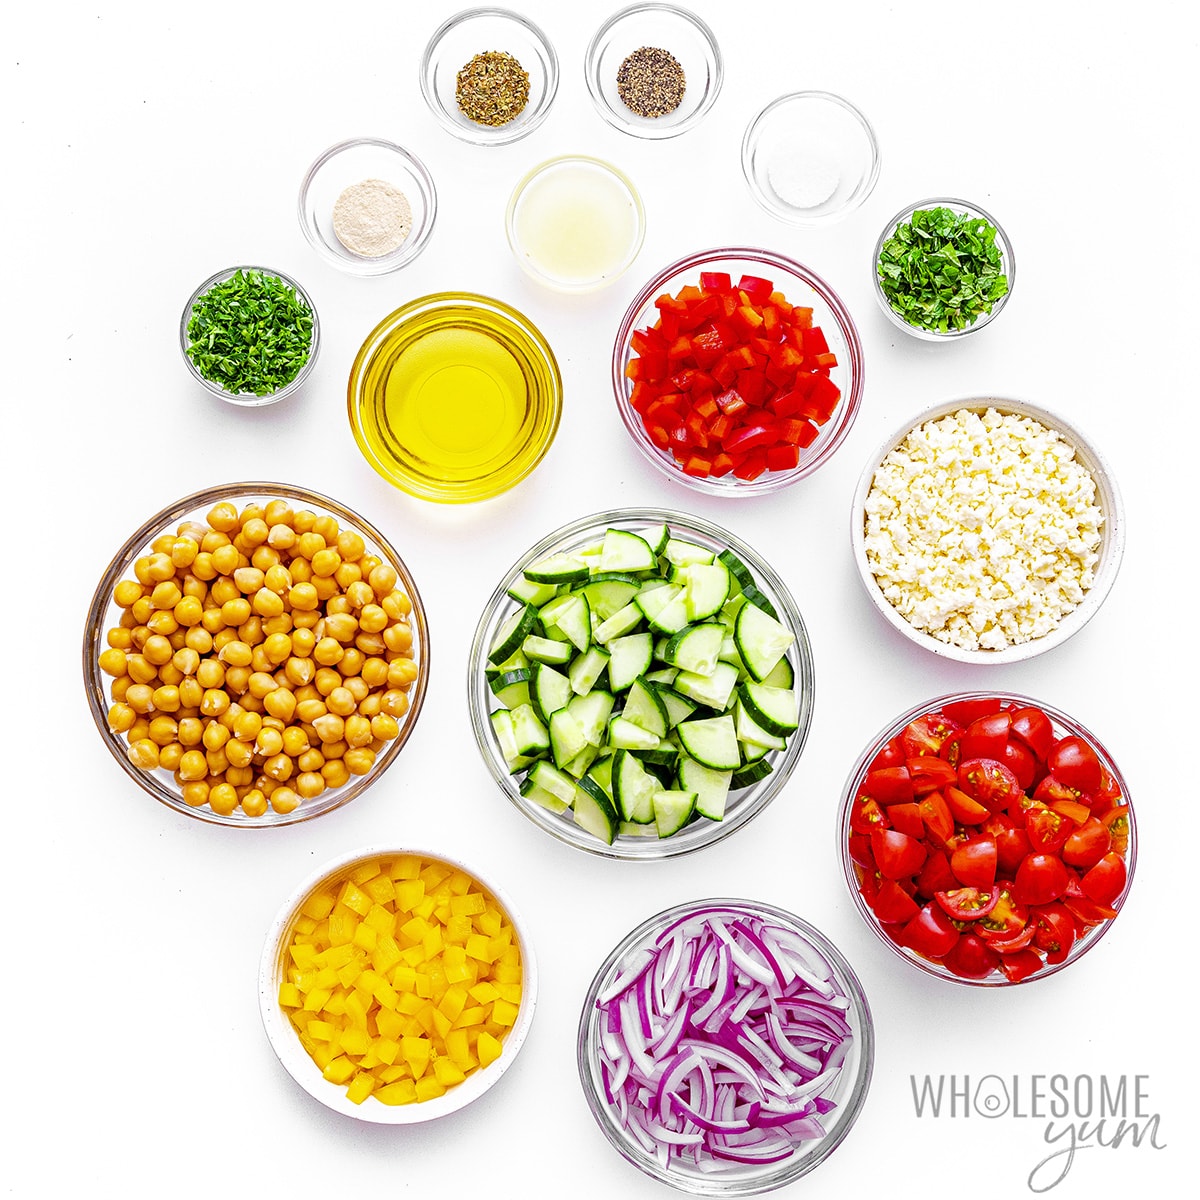 Mediterranean salad recipe ingredients measured out in bowls.